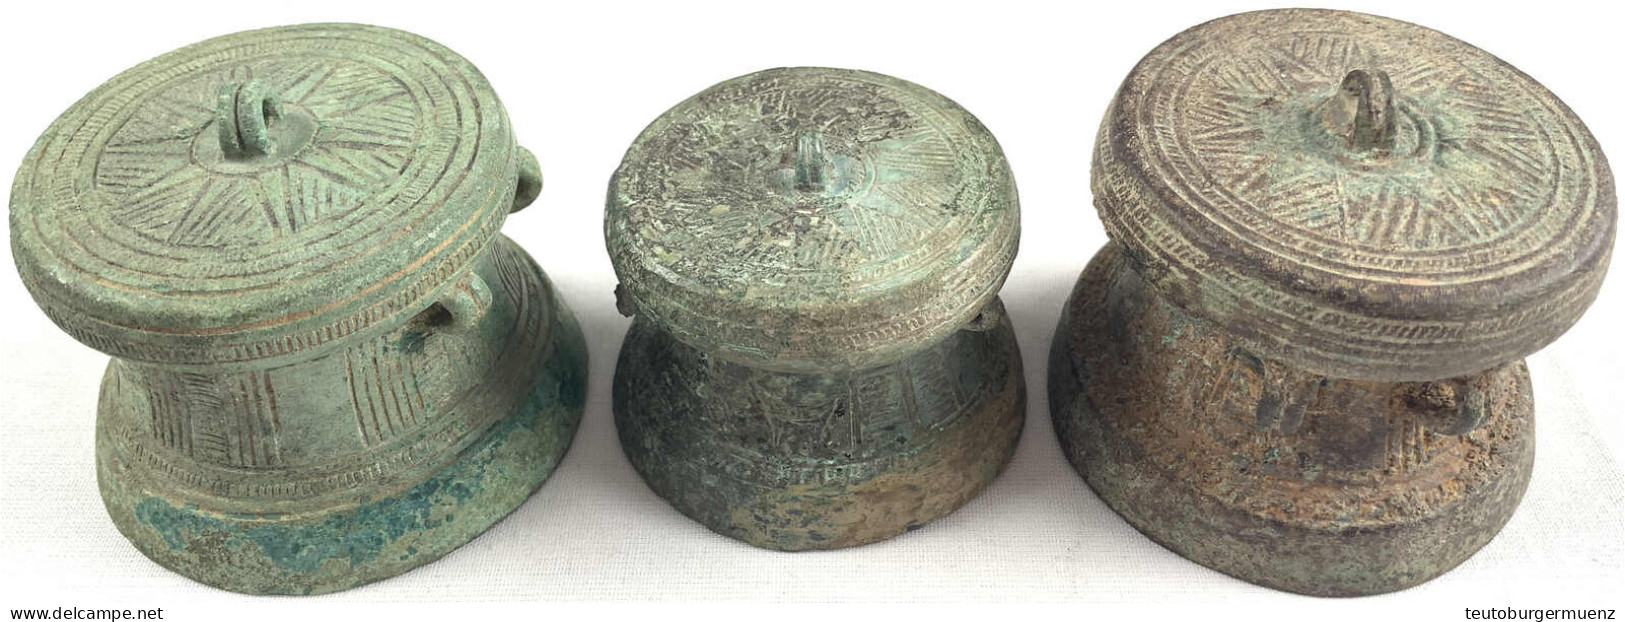 3 Miniatur-Bronzetrommeln Der Dong-Son-Kultur (Lạc Việt- Kultur). 5./1. Jh. V. Chr. Anbei Das Heft "Der Primitivgeld-Sam - Indonesia